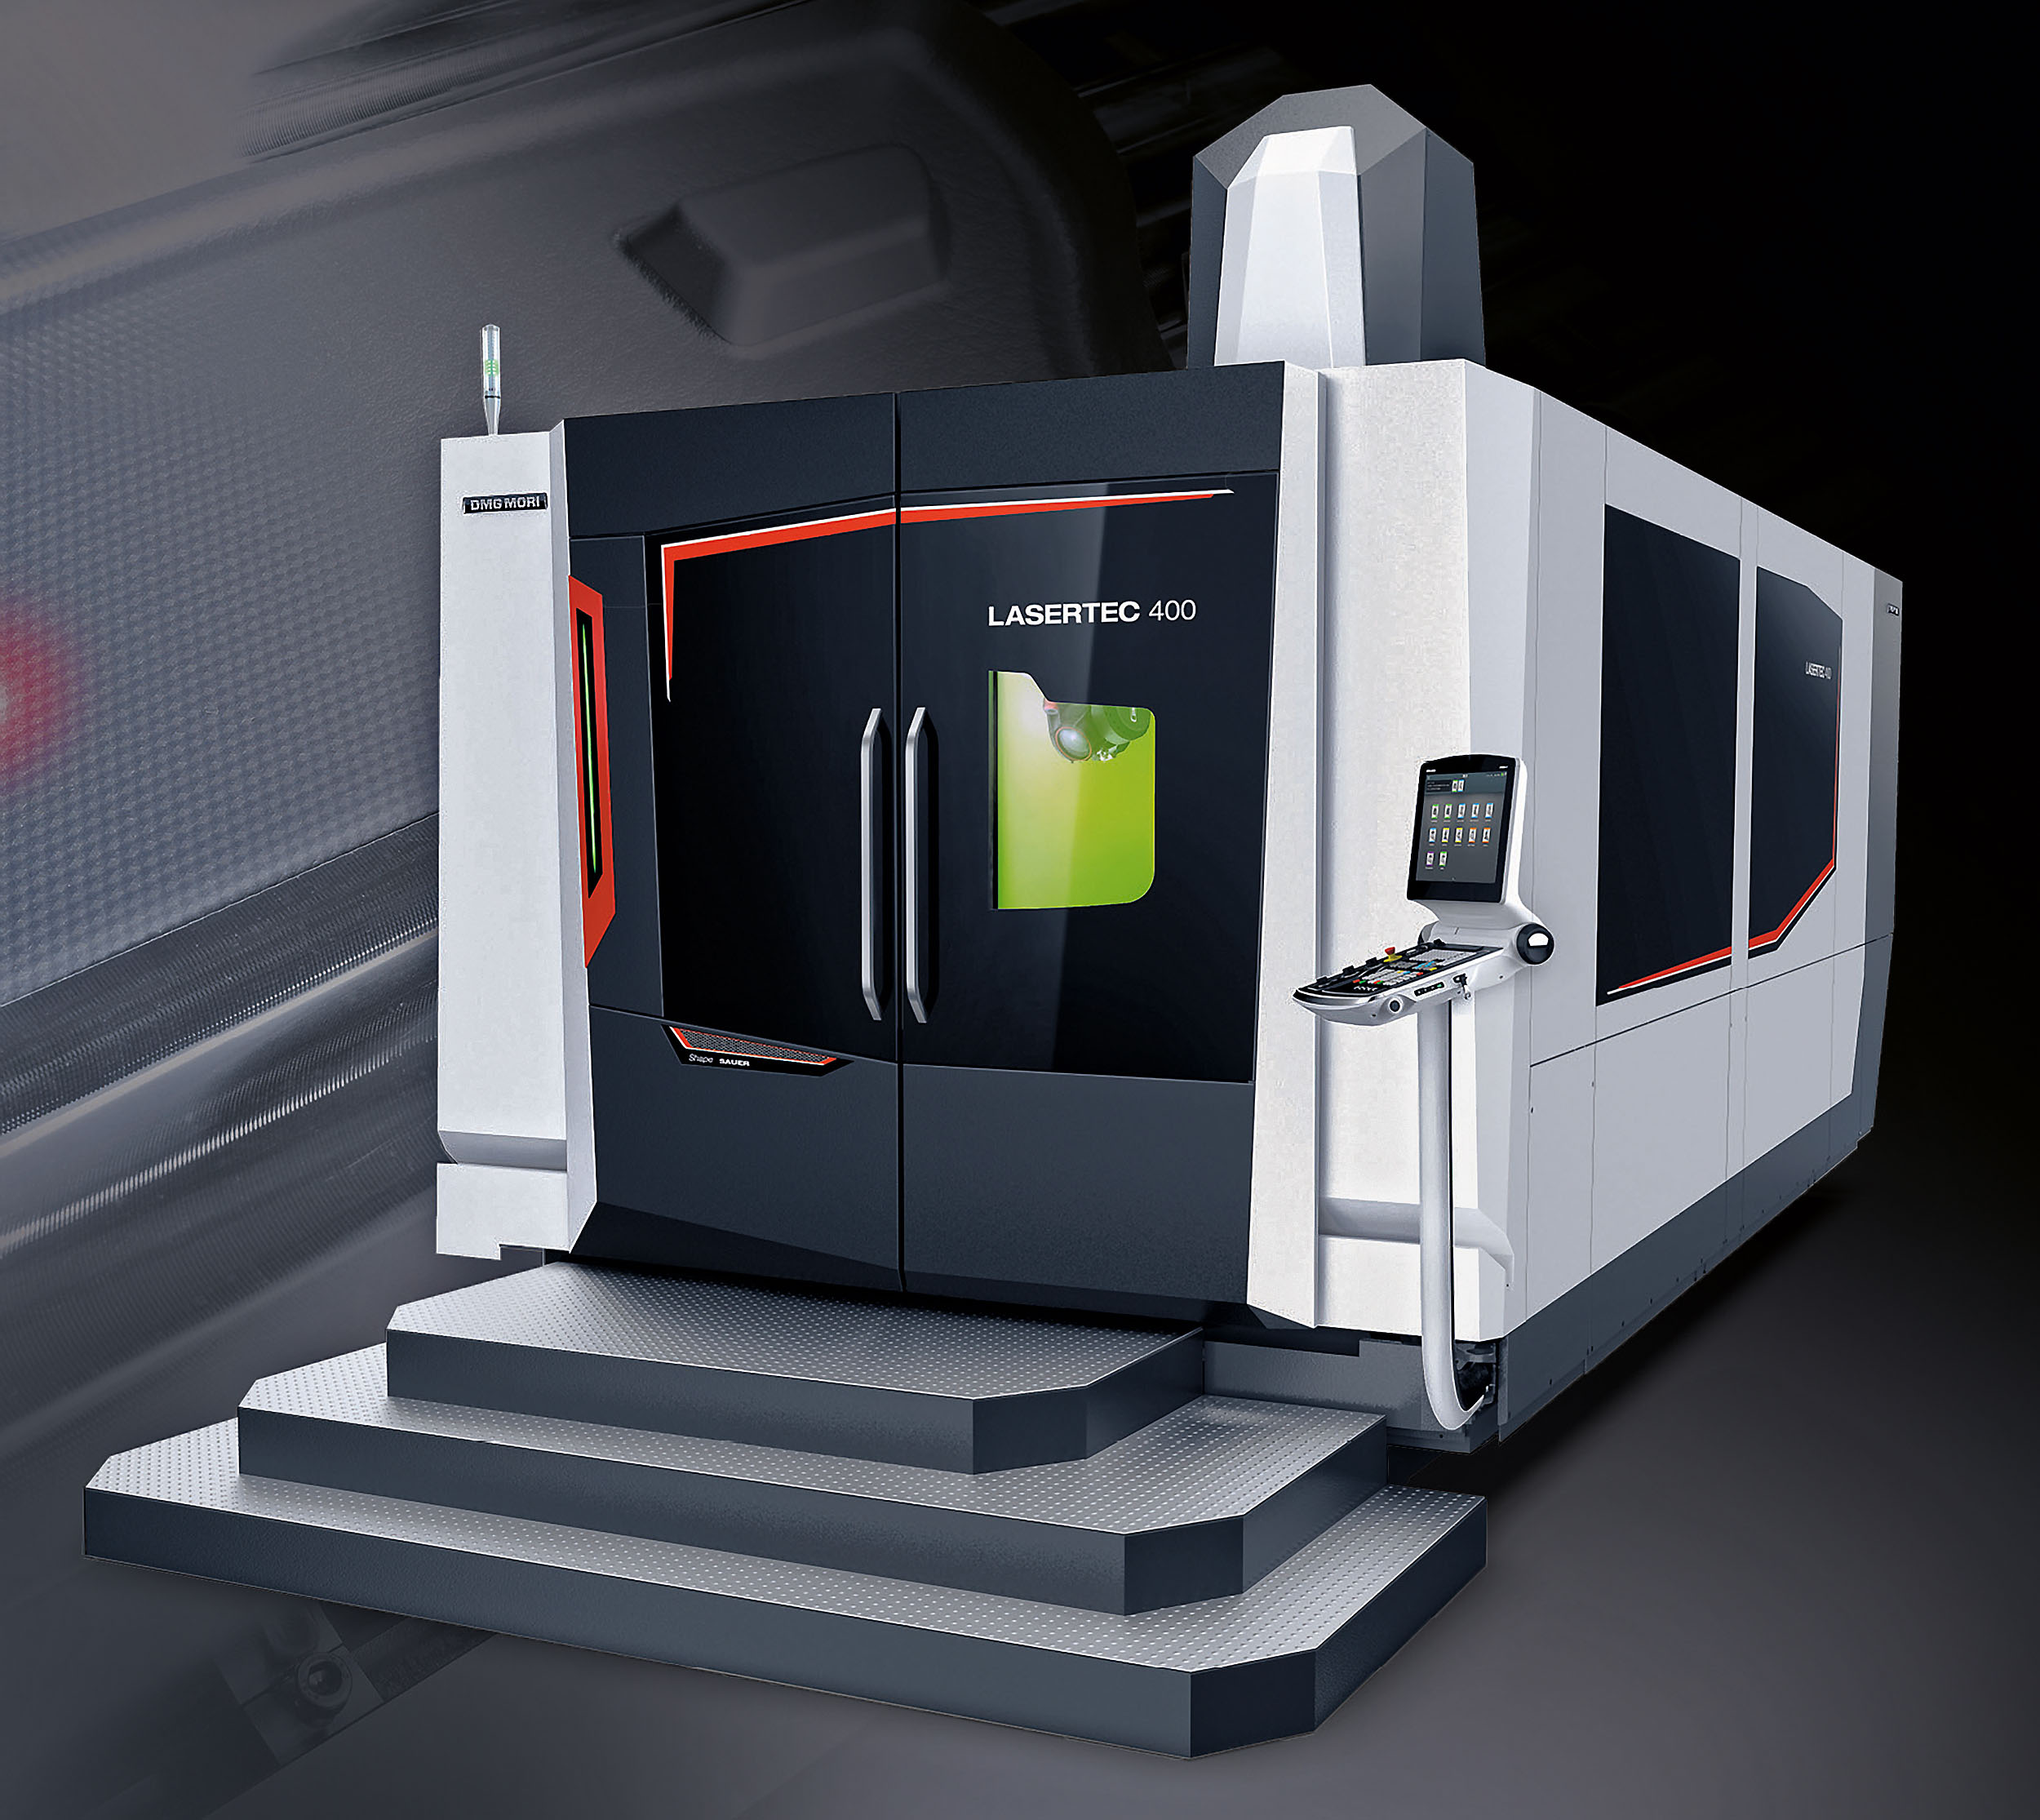 DMG Mori Announces LASERTEC 400 Shape Laser Ablation System - 3DPrint.com | The Voice 3D Printing / Additive Manufacturing